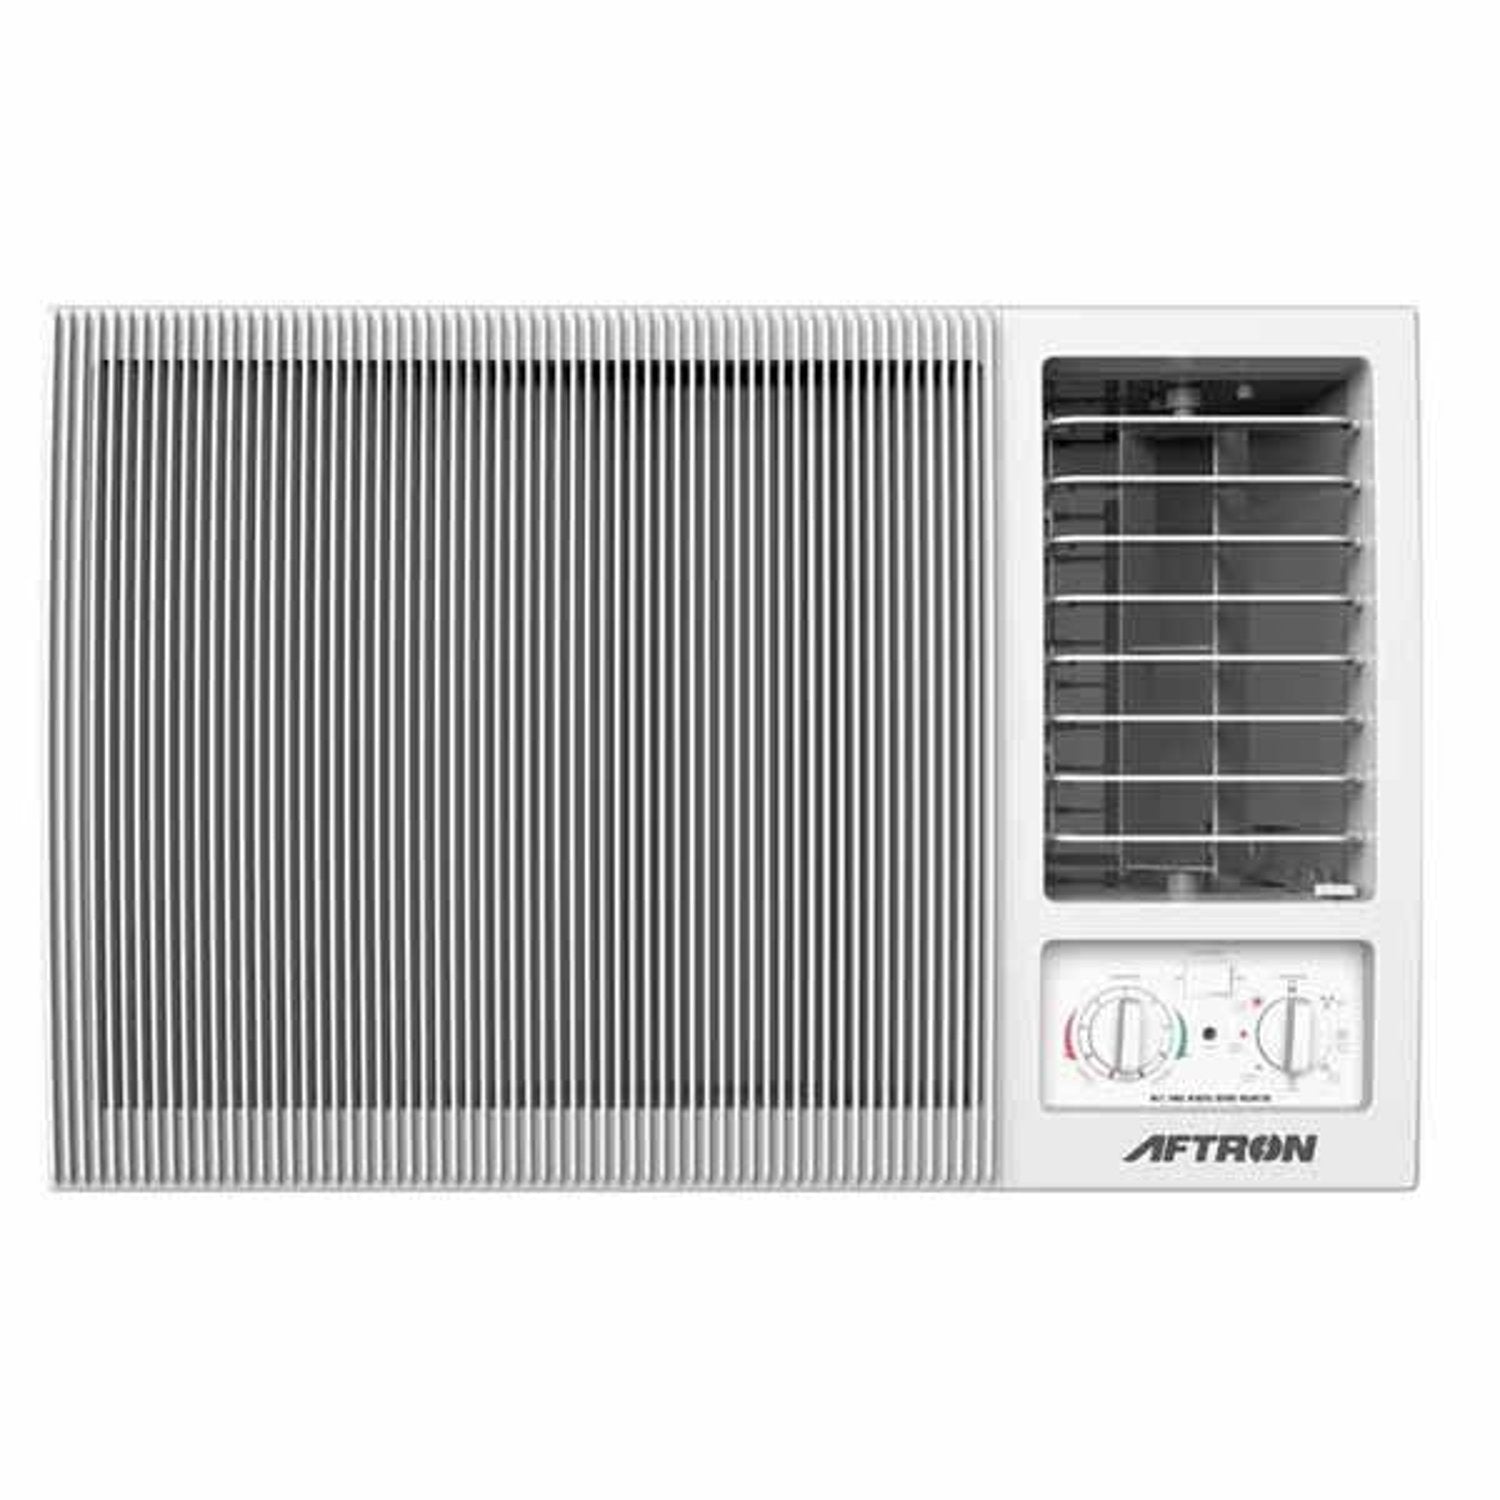 Aftron Window Air Conditioner 2.0 Ton AFA2465